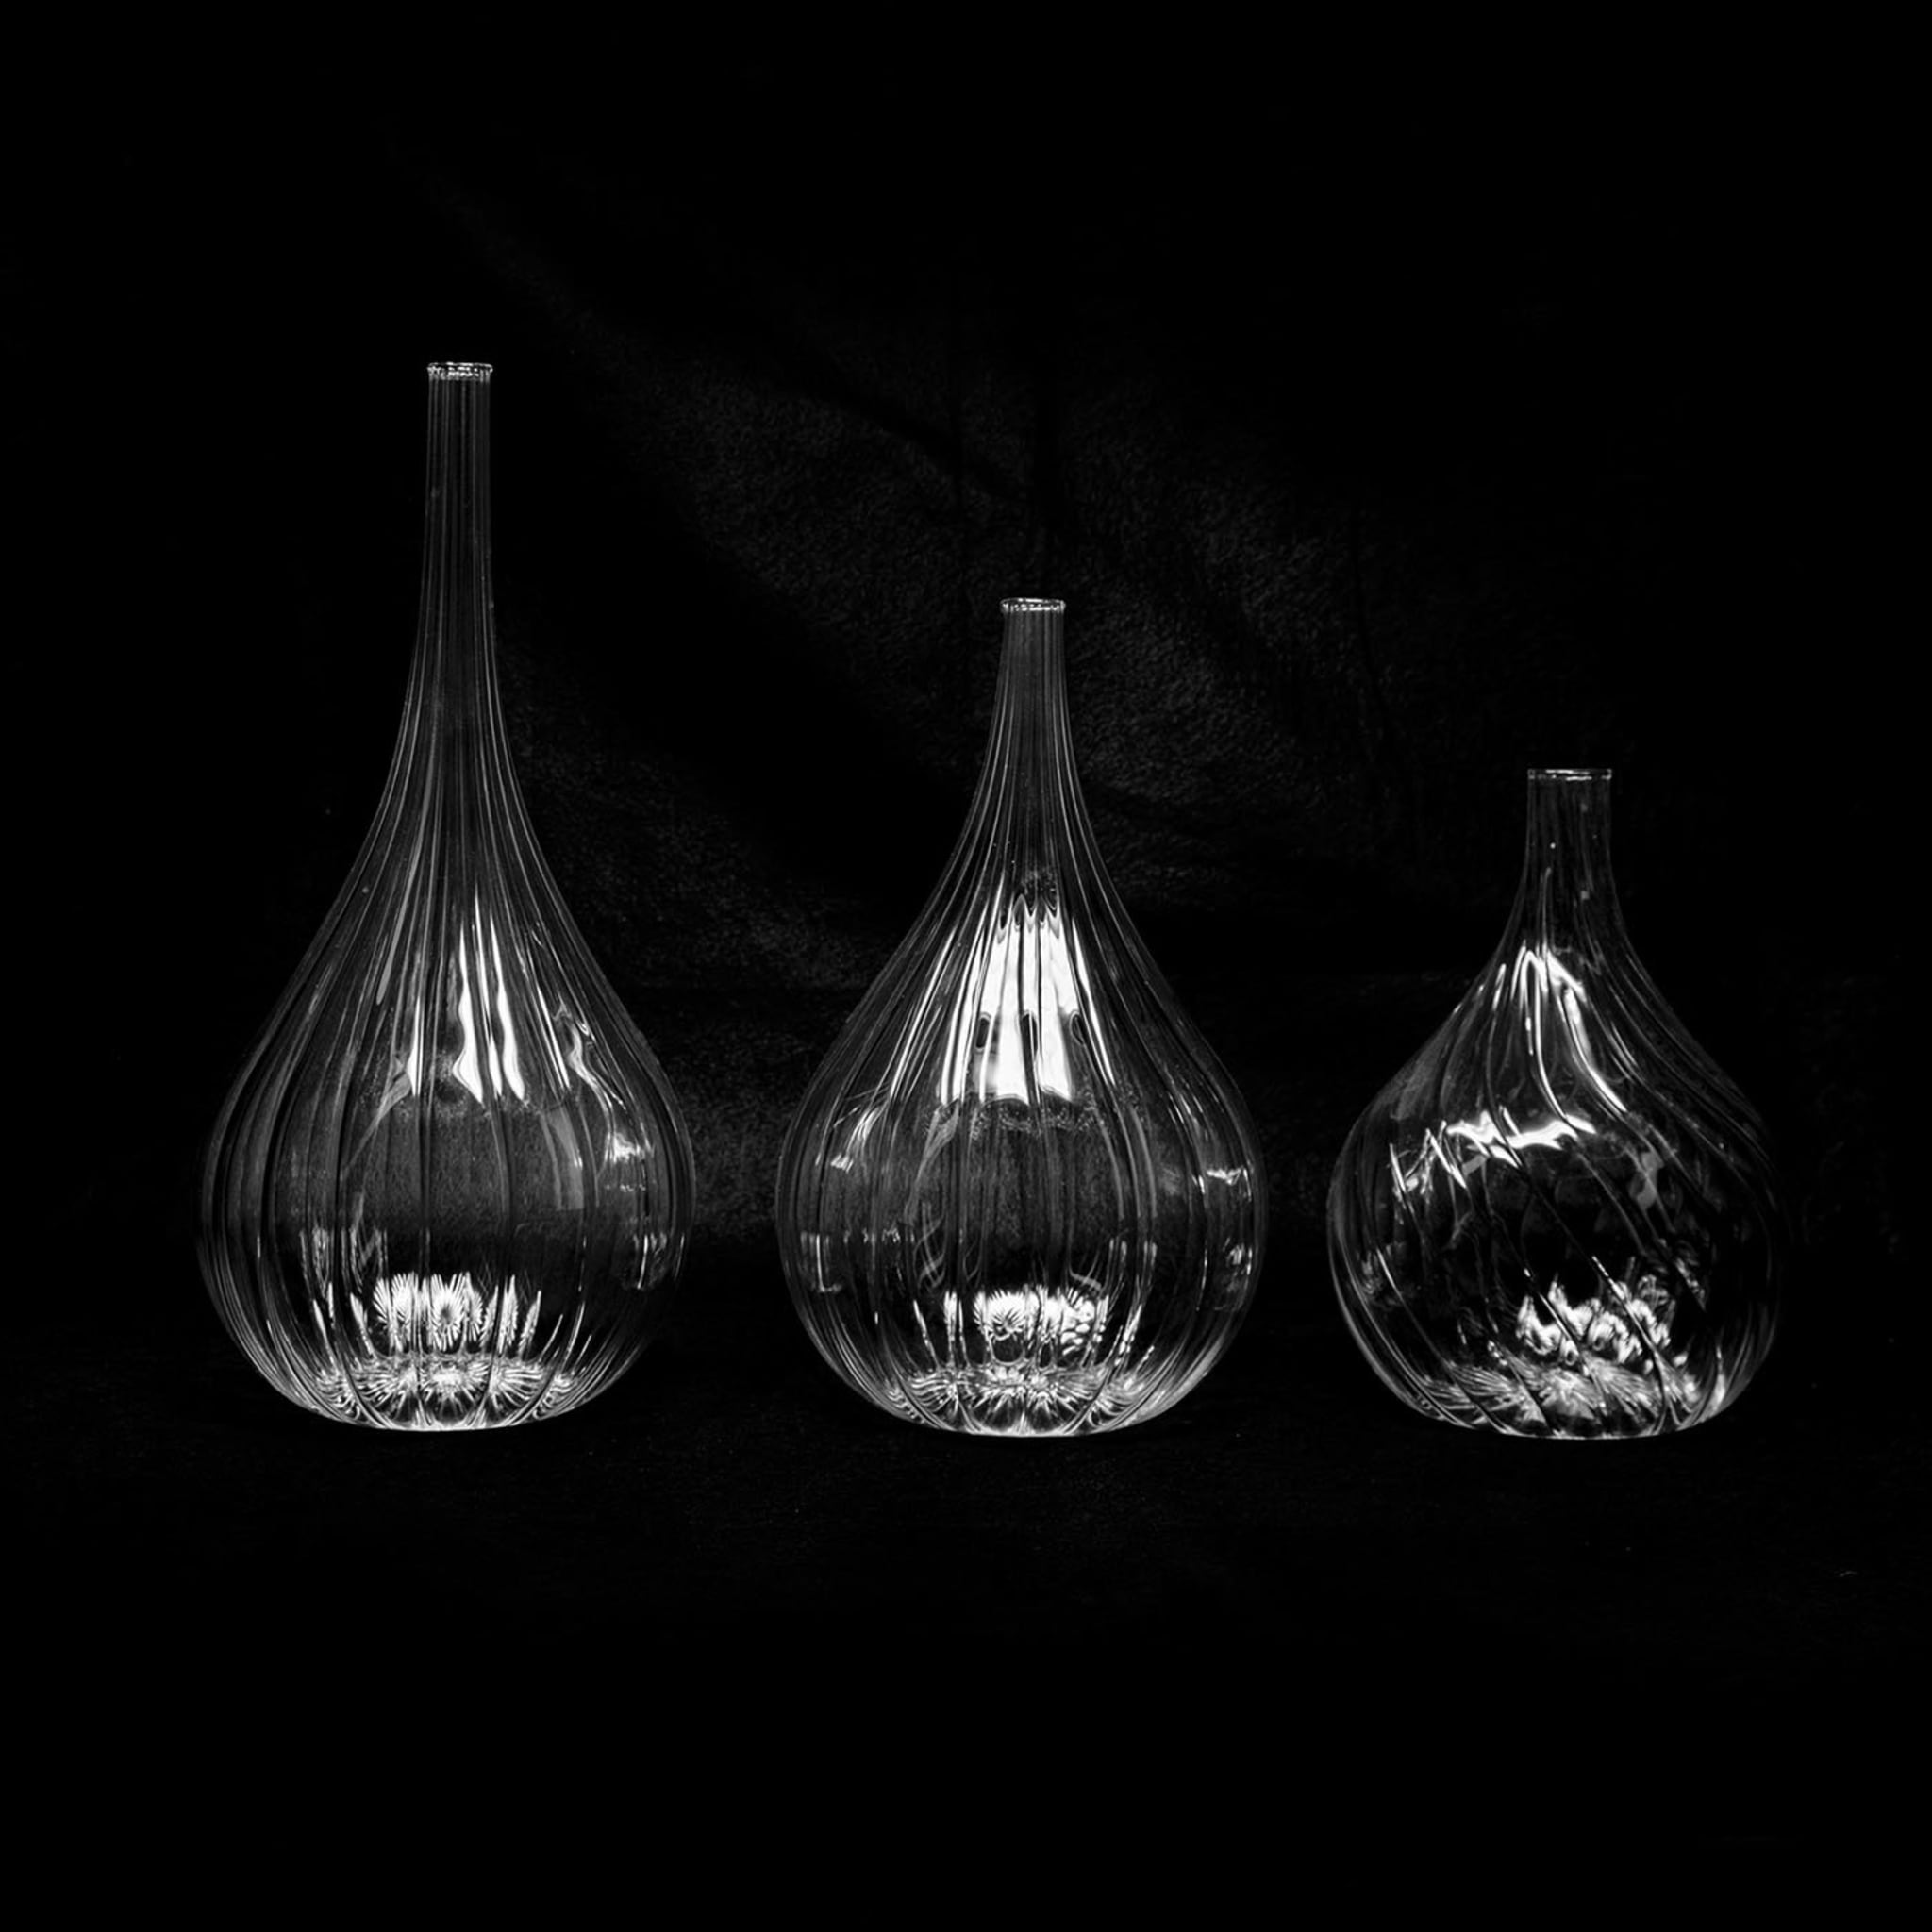 Lukovki Set of 3 Vases - Alternative view 1